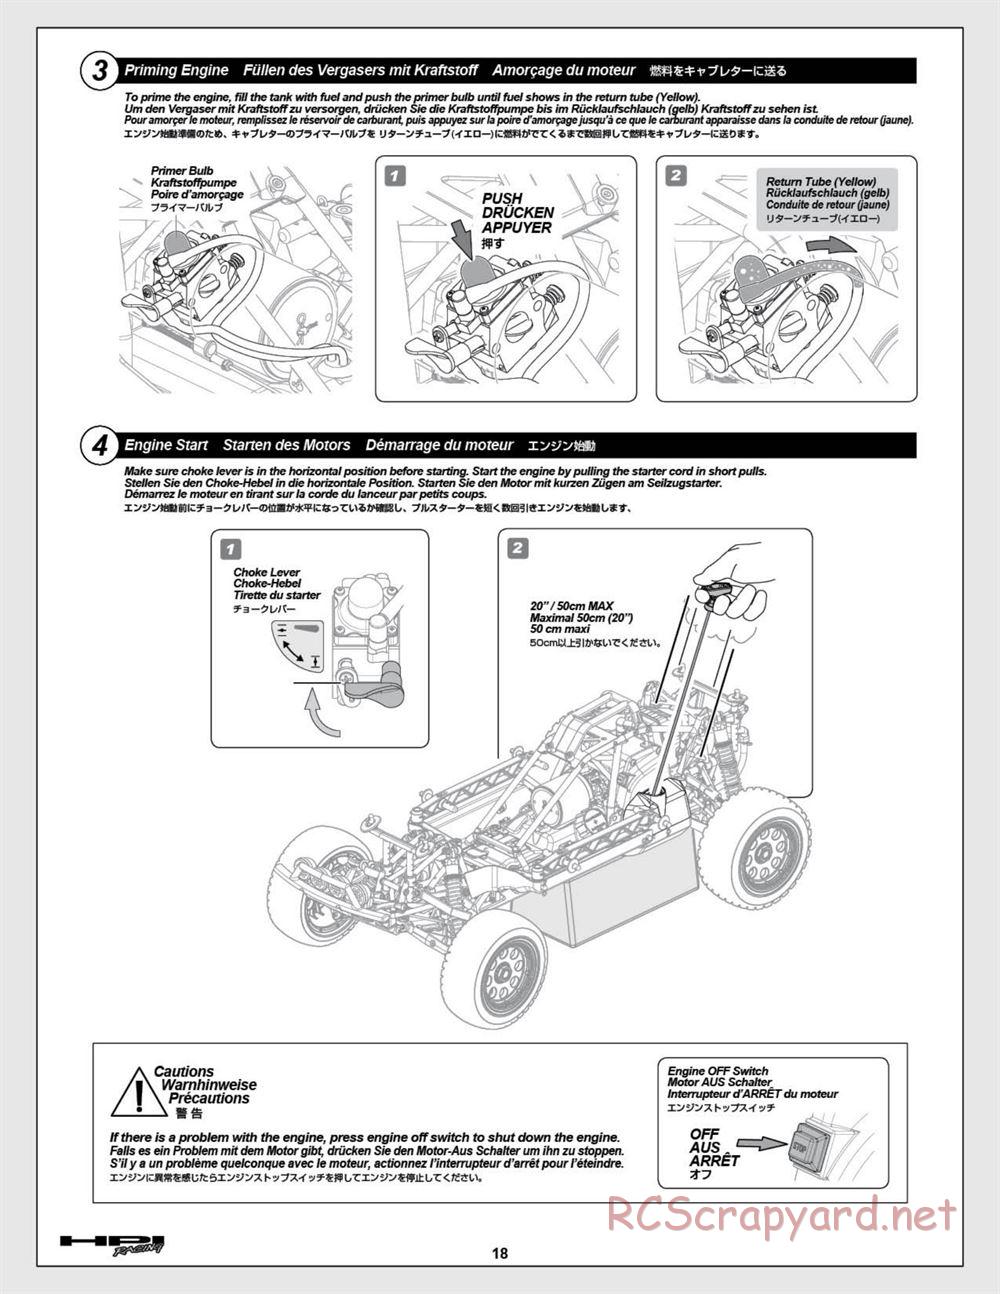 HPI - Baja 5T (2008) - Manual - Page 18